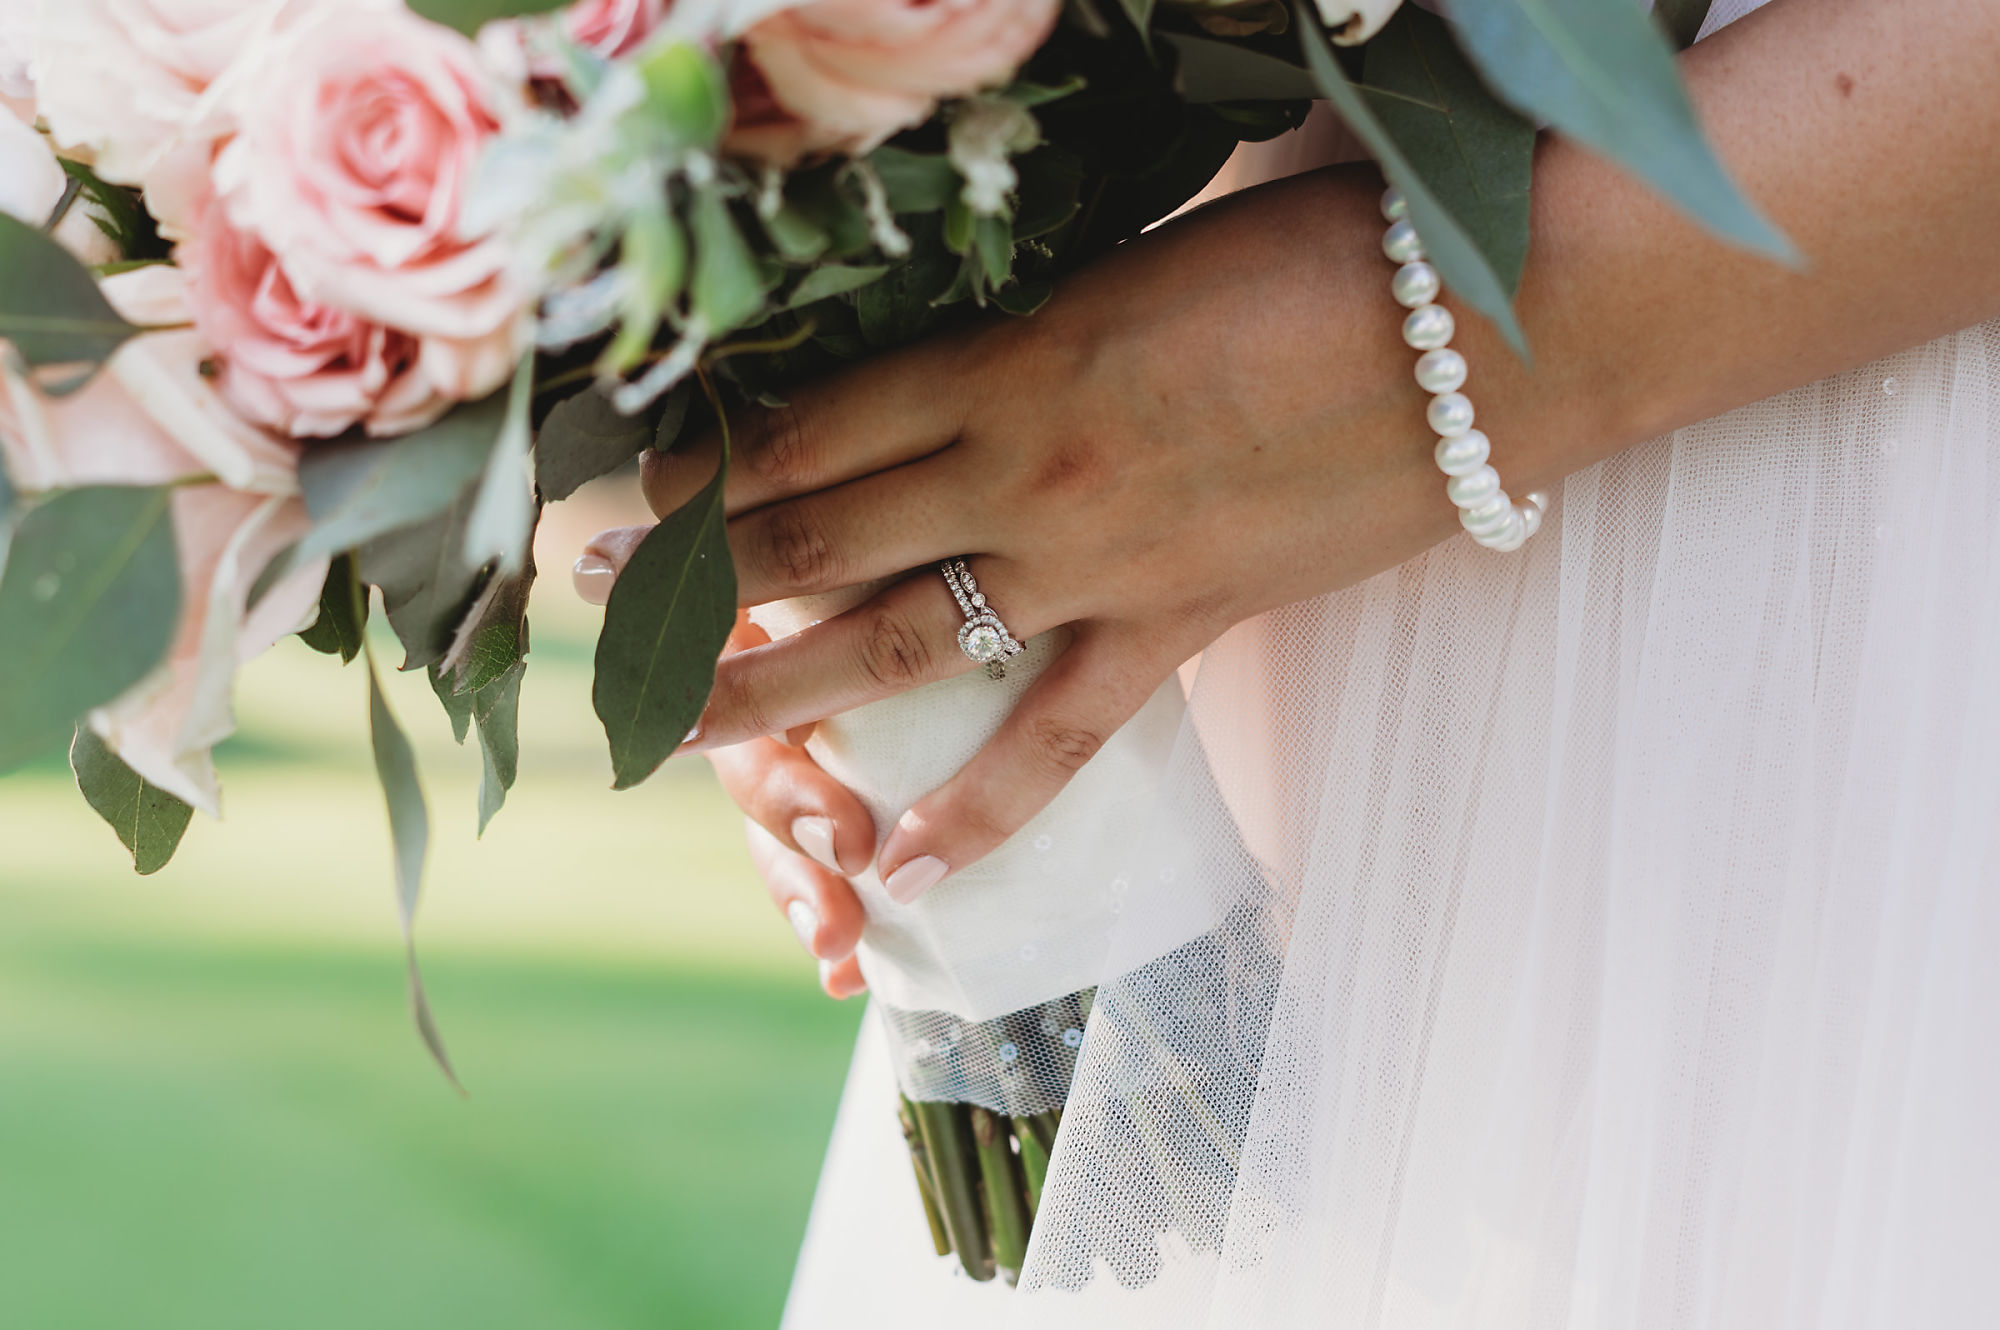 Dundas Wedding Photographer Jennifer Blaak captures a portrait of the brides bouquet on her wedding day.